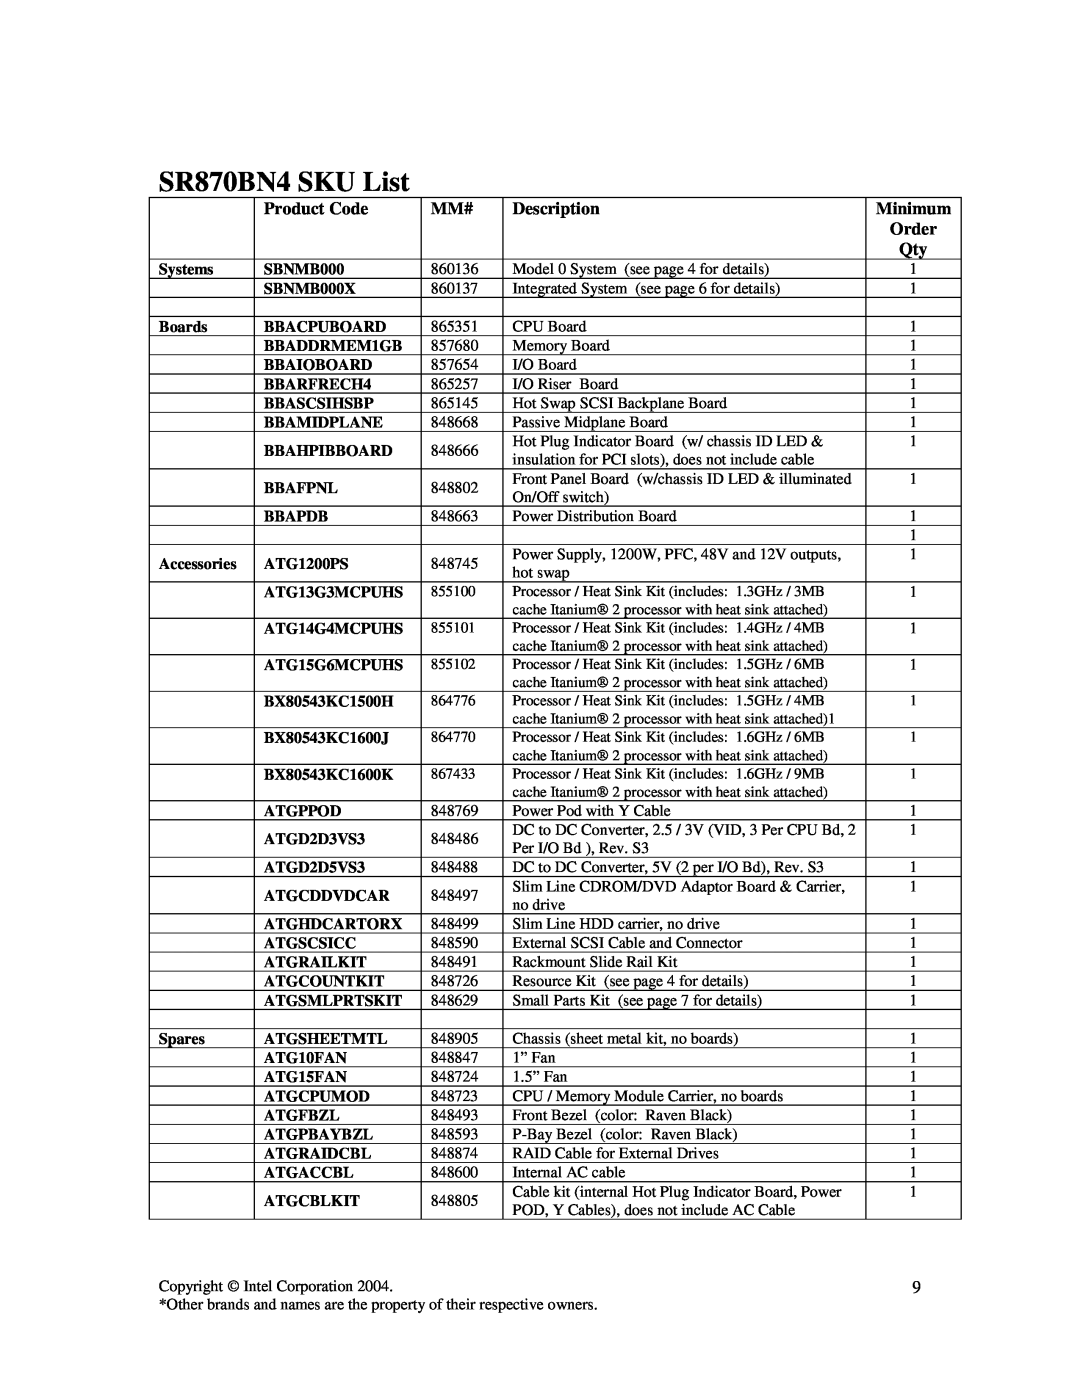 Intel warranty SR870BN4 SKU List, Product Code, Description, Minimum, Order 